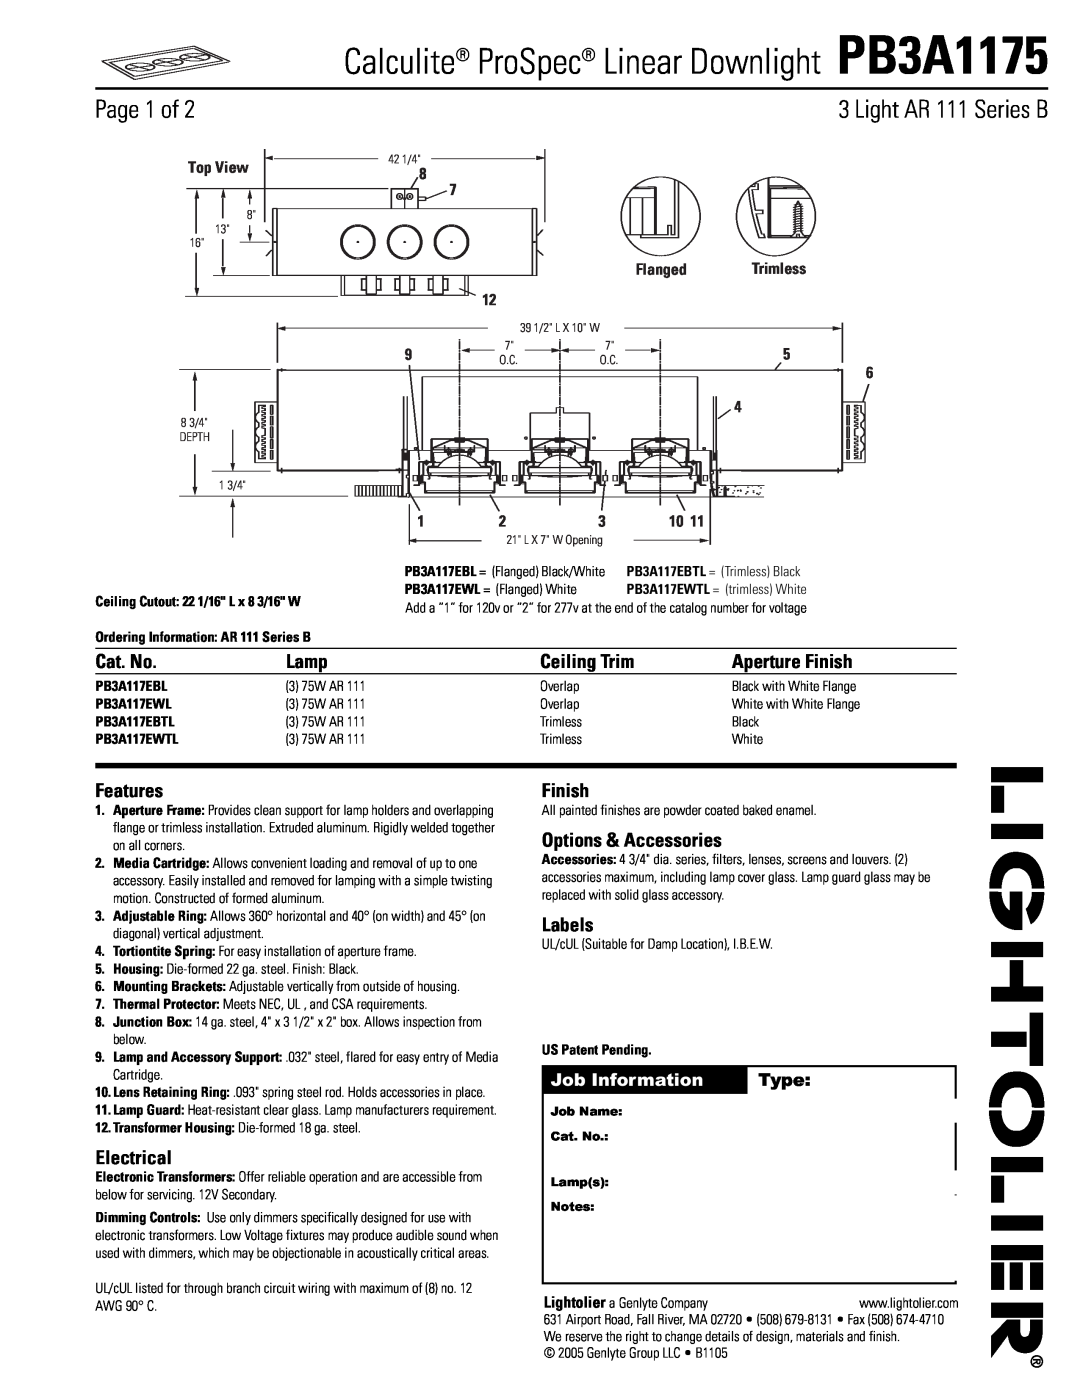 Lightolier manual Calculite ProSpec Linear Downlight PB3A1175, Page 1 of, Cat. No, Lamp, Ceiling Trim, Aperture Finish 